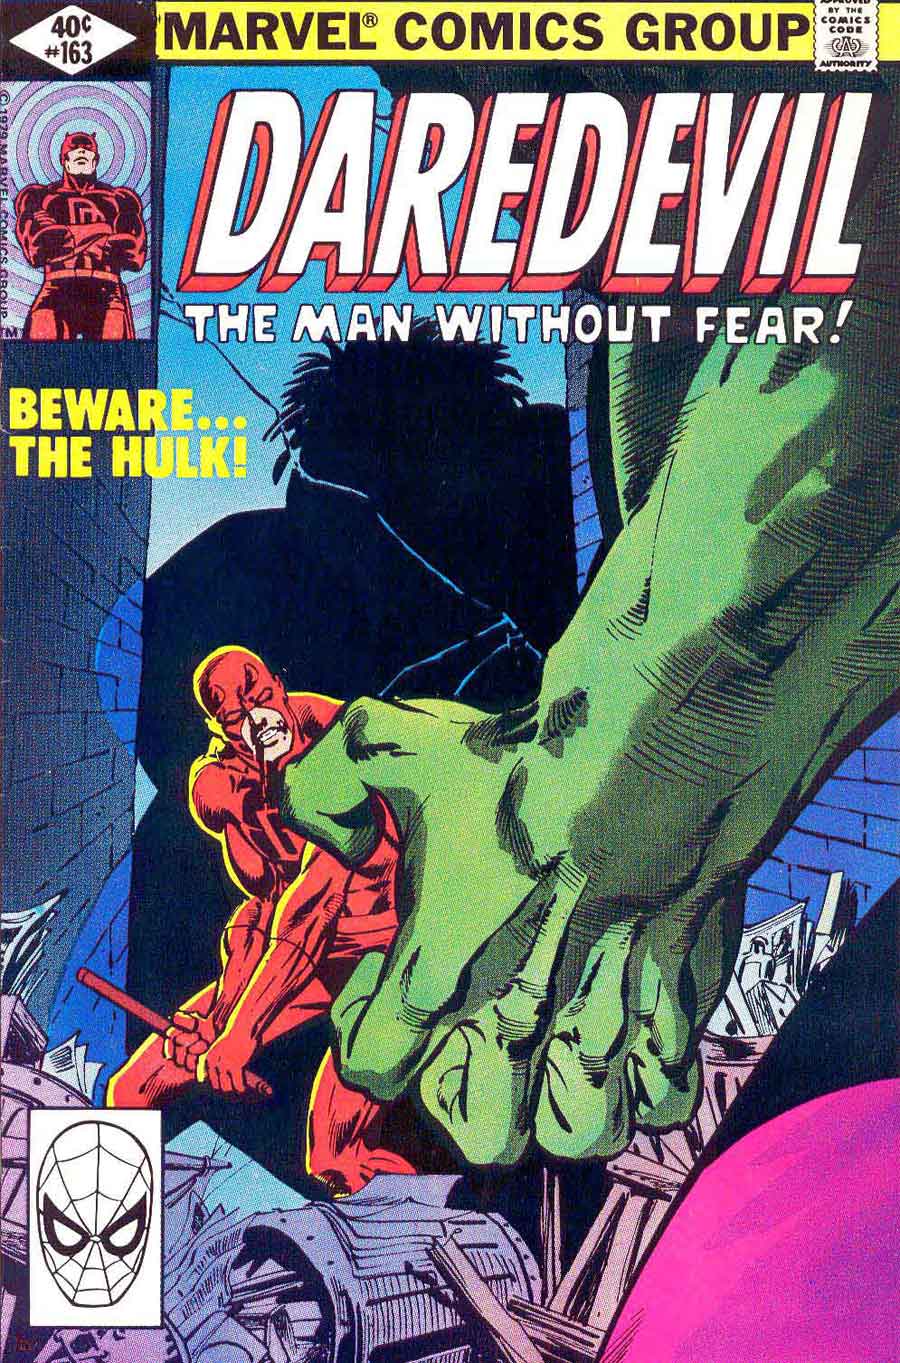 Daredevil v1 #162 marvel comic book cover art by Frank Miller